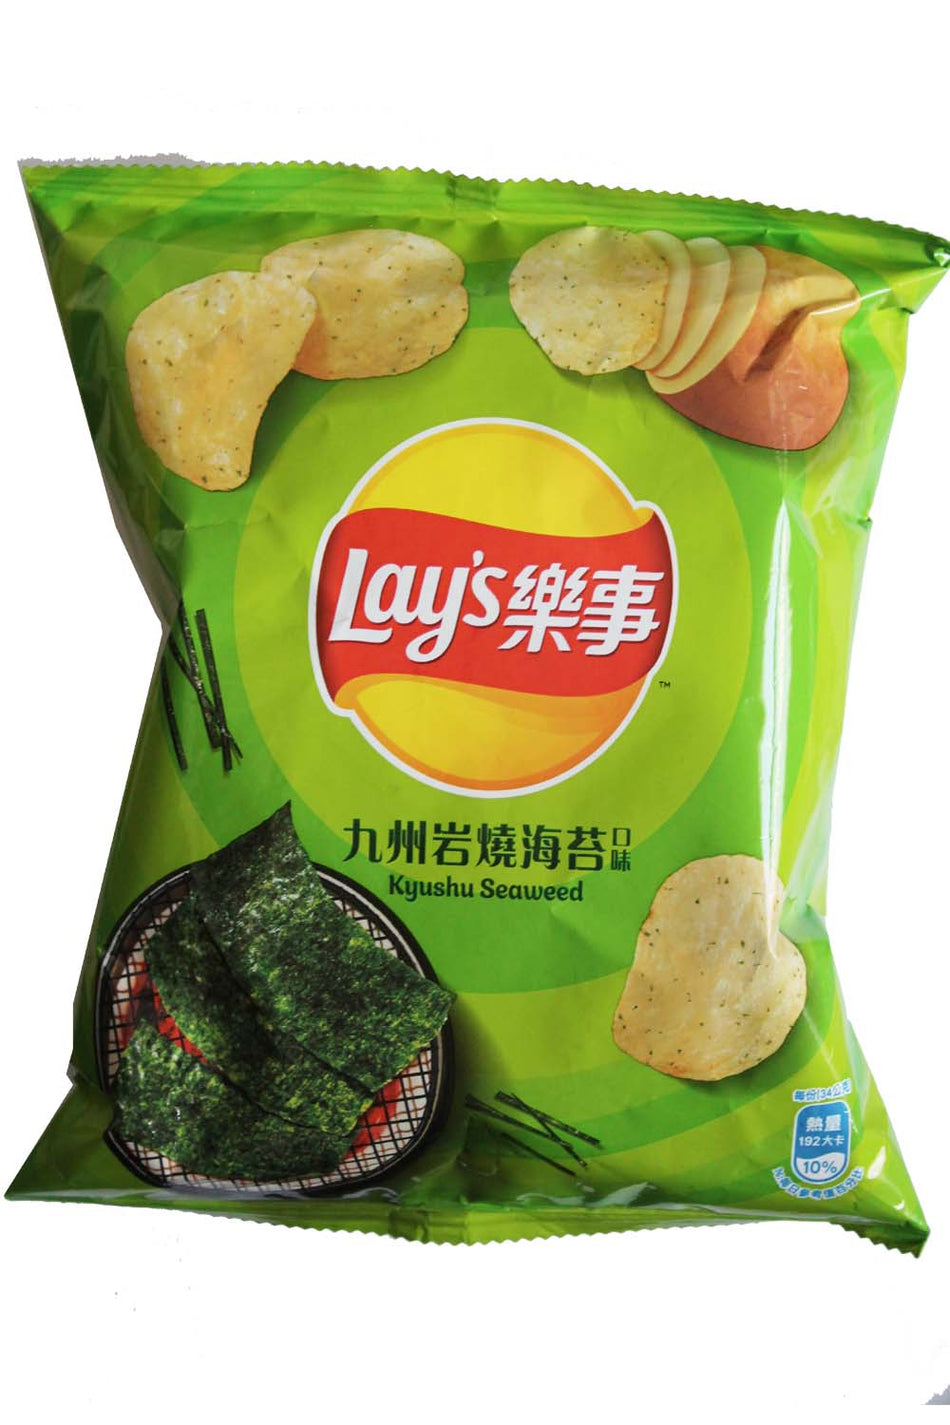 Lay's Kyushu Seaweed flavor chip